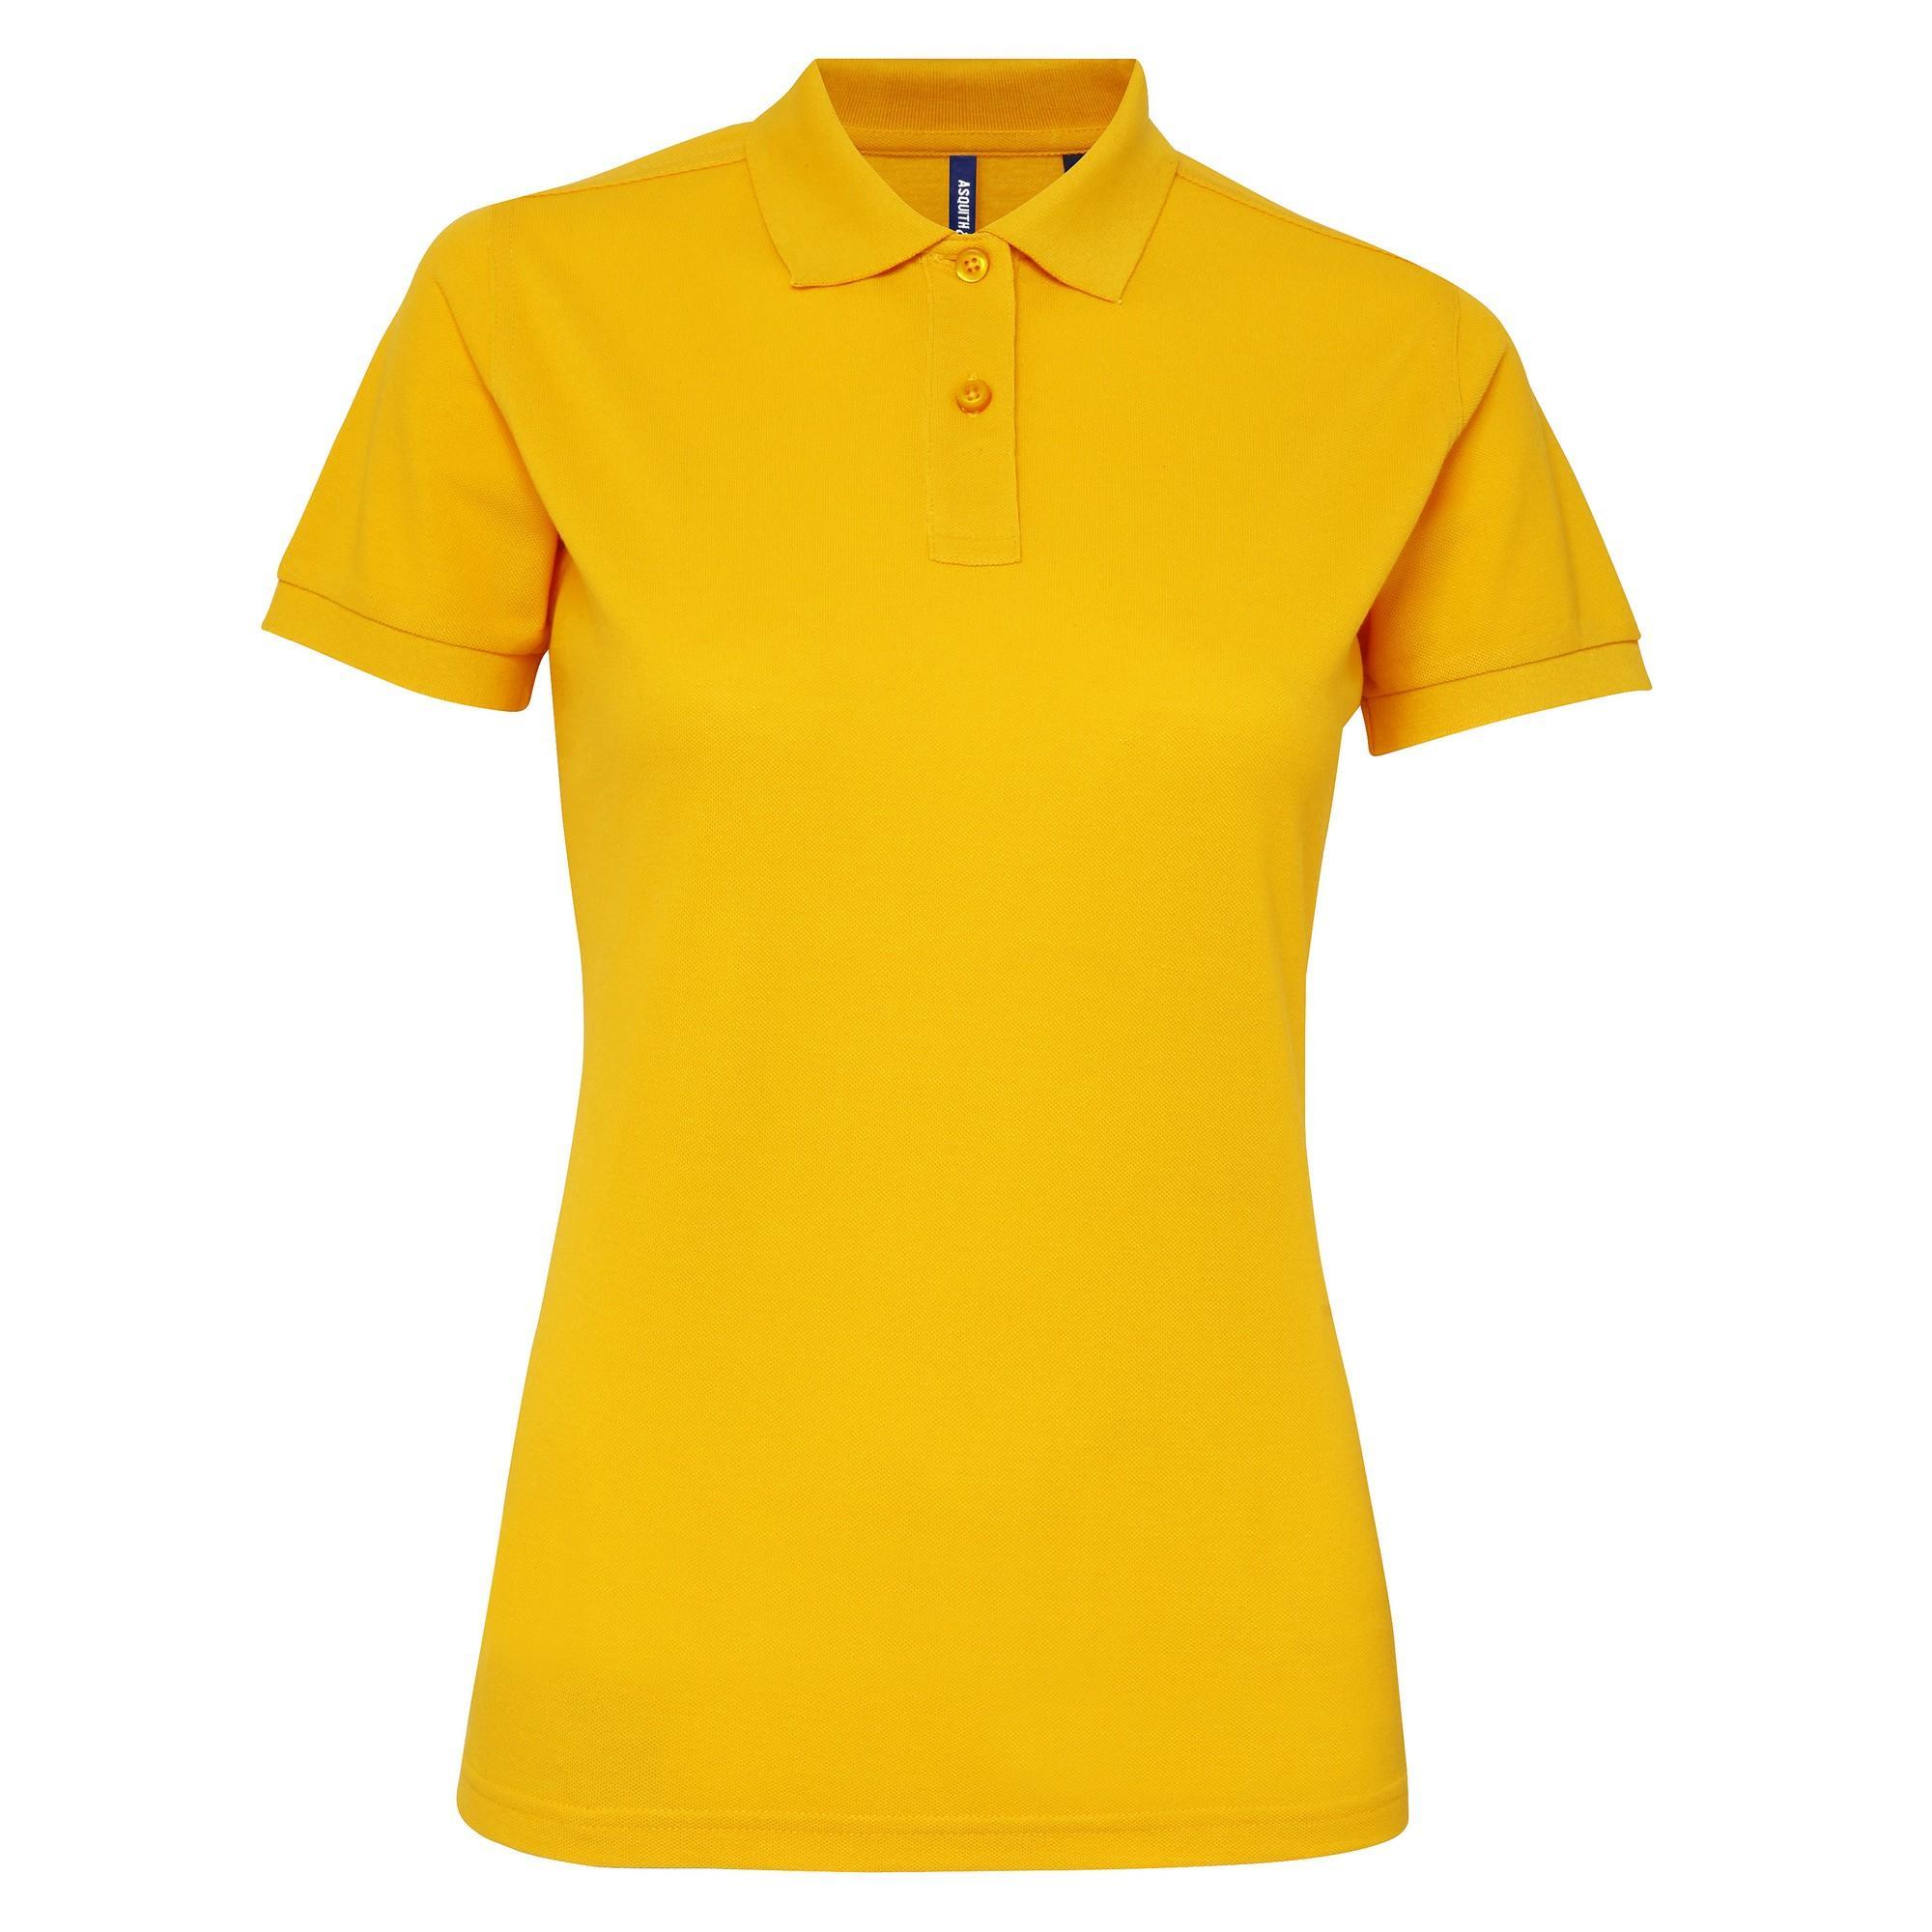 Asquith & Fox Womens/Ladies Short Sleeve Performance Blend Polo Shirt (Sunflower) (2XL)